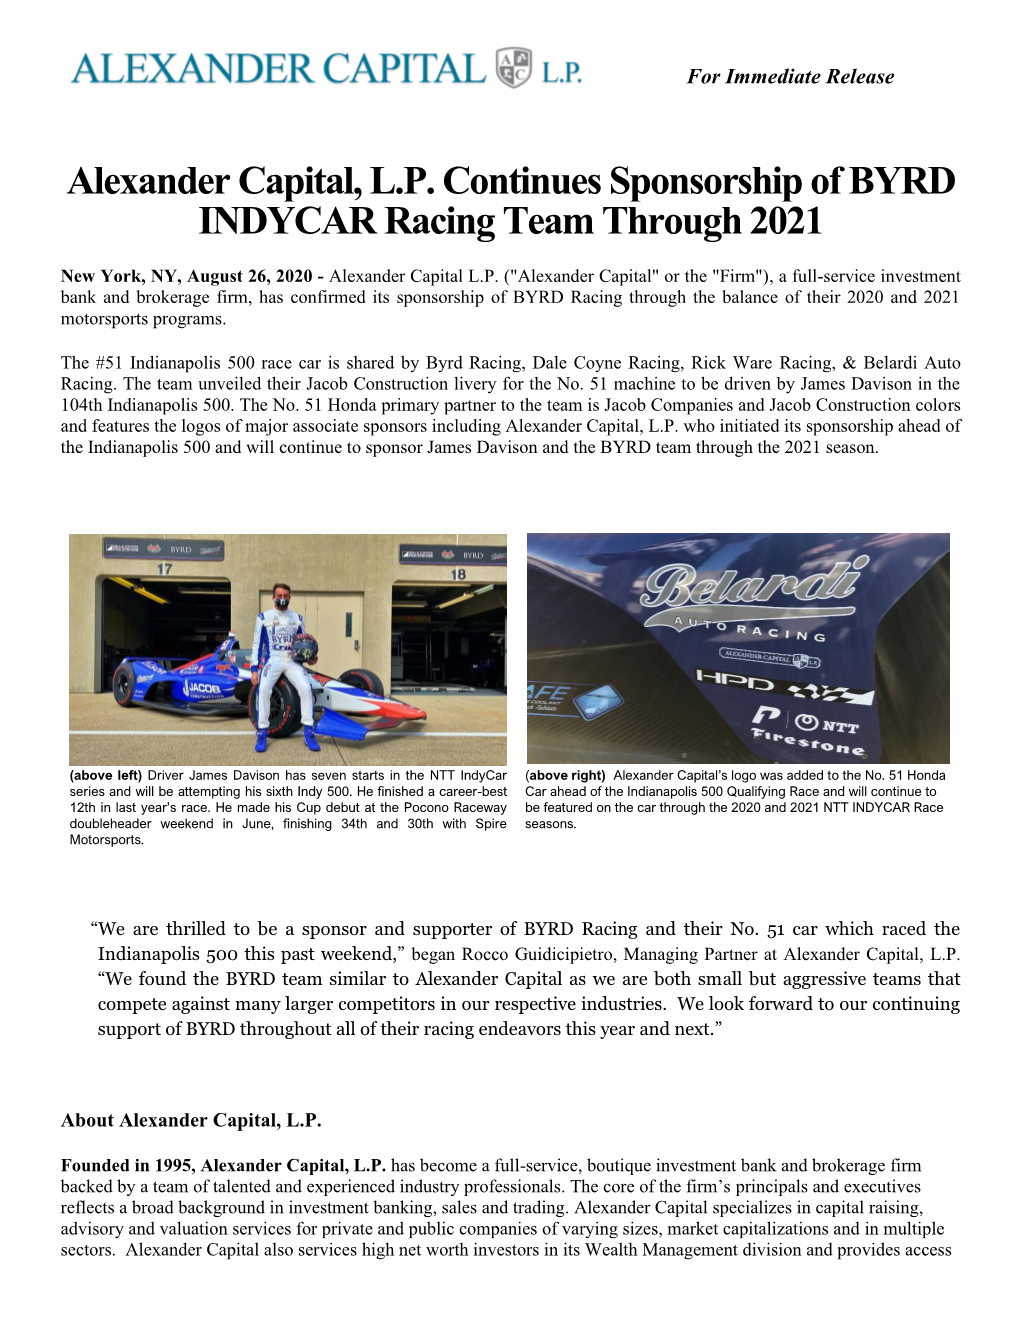 Alexander Capital, L.P. Continues Sponsorship of BYRD INDYCAR Racing Team Through 2021